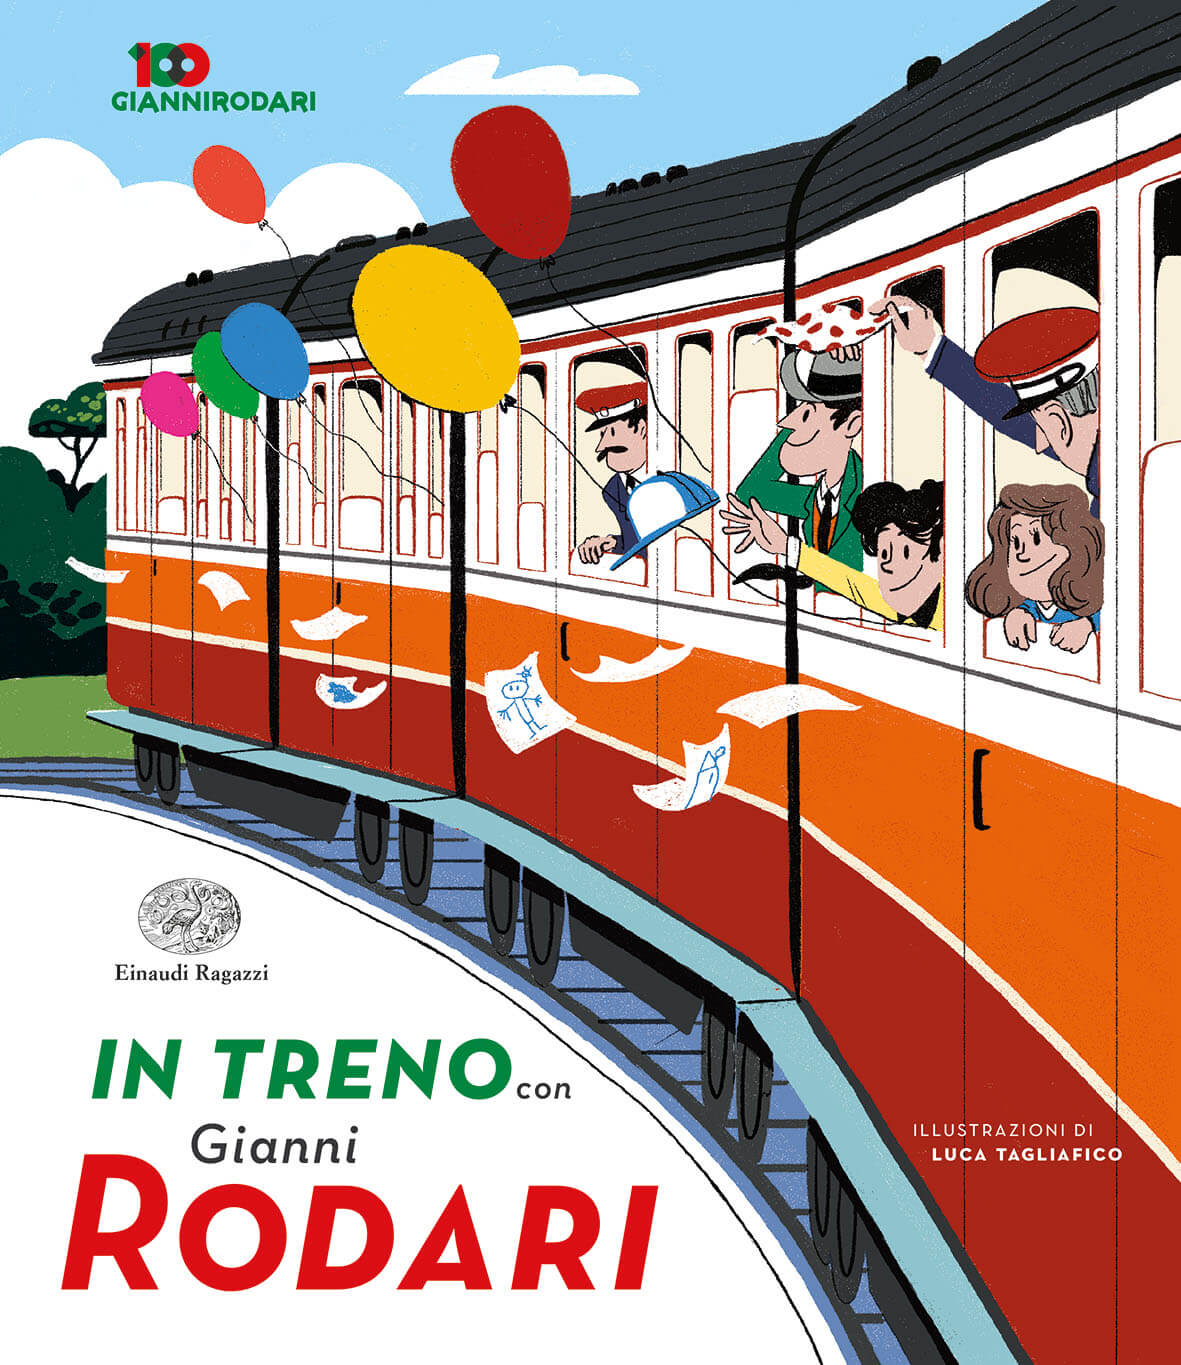 In treno con Gianni Rodari - Rodari/Tagliafico | Einaudi Ragazzi